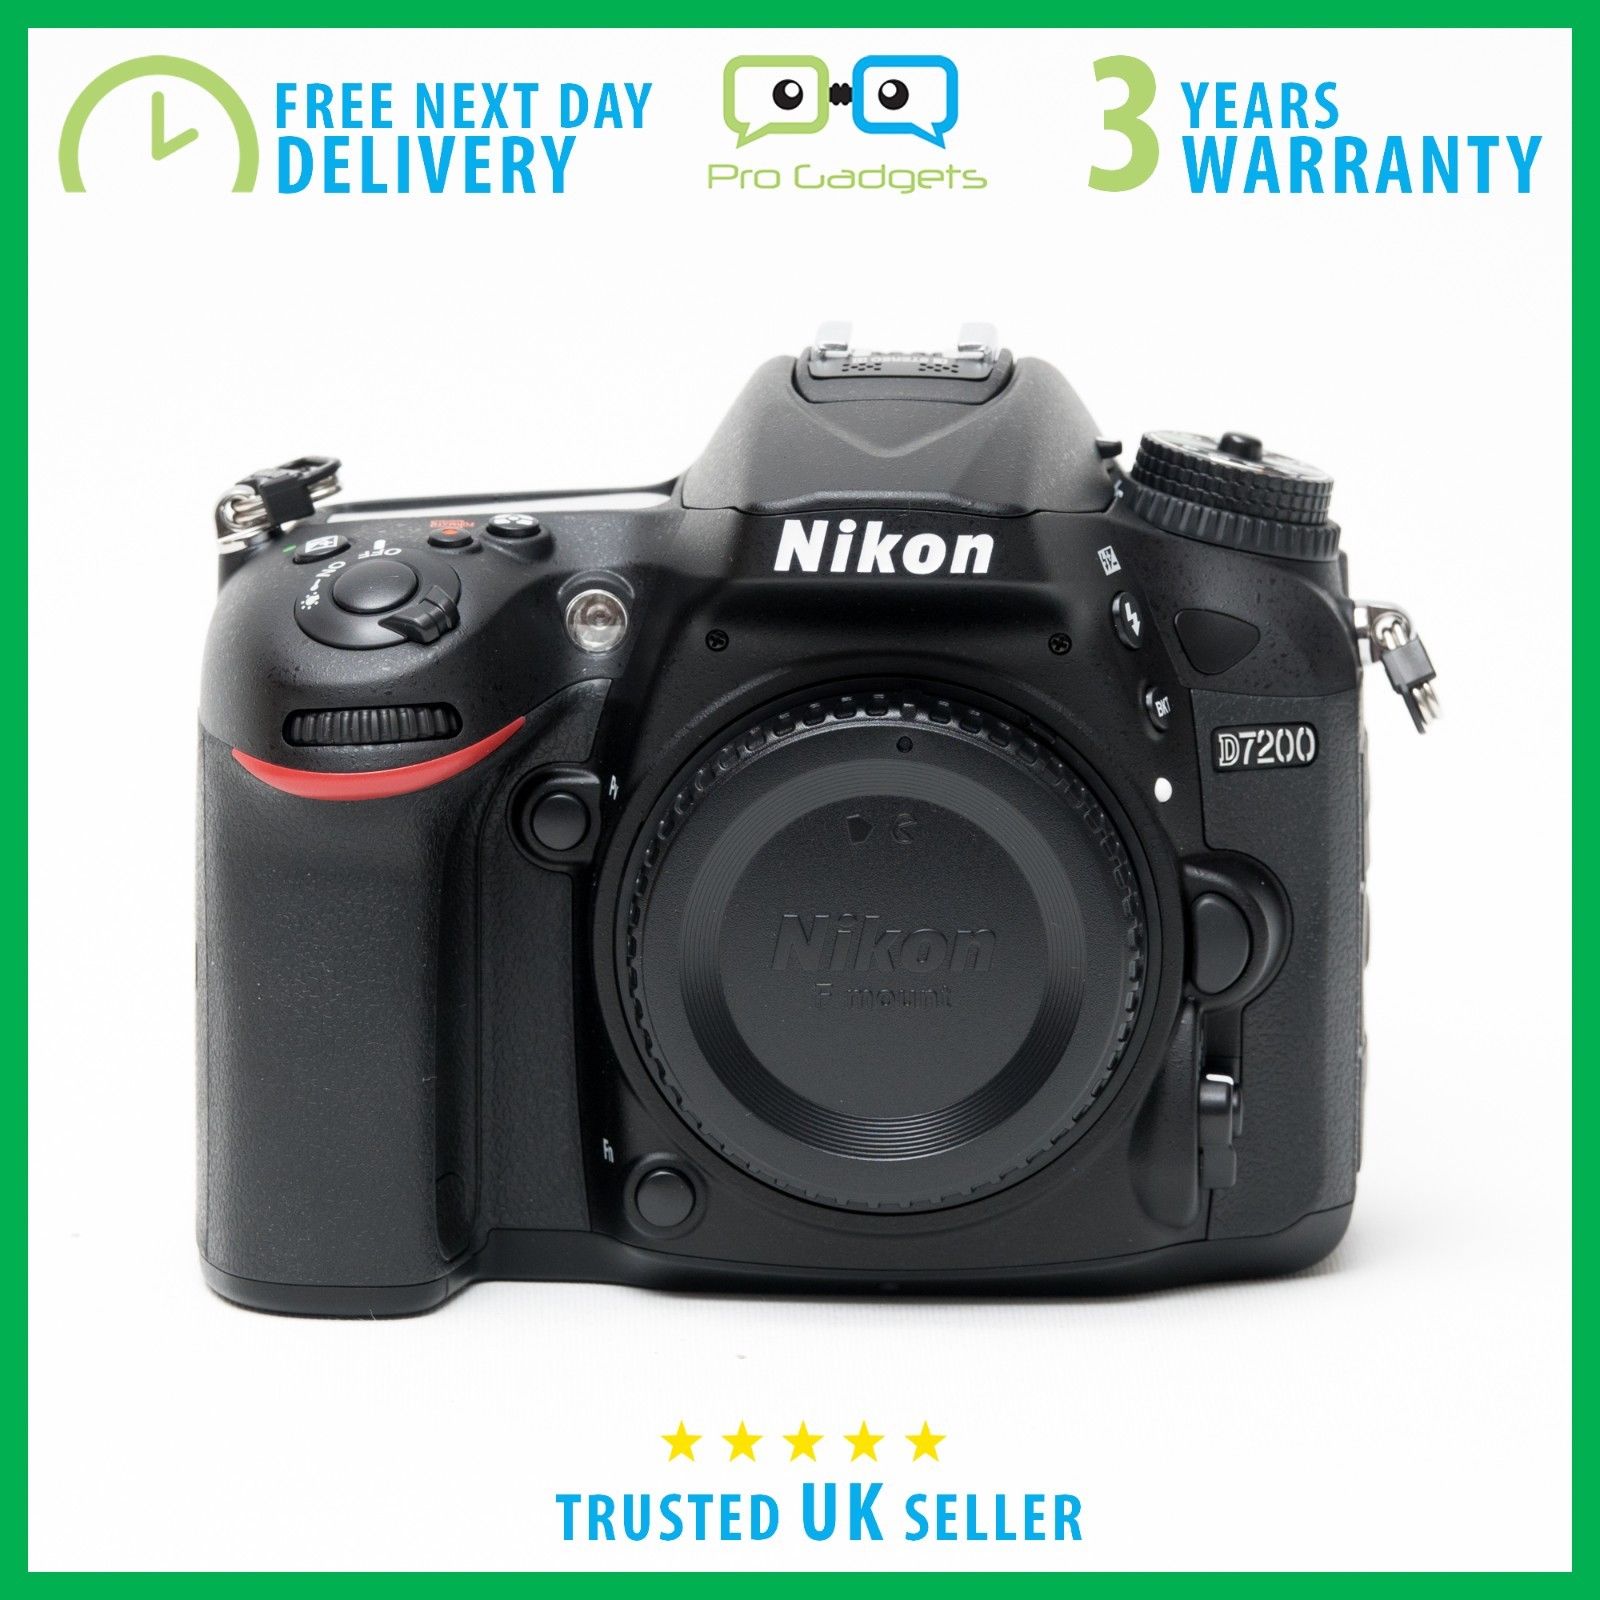 New Nikon D7200 24.2MP Digital SLR Camera Body Only - 3 Year Warranty